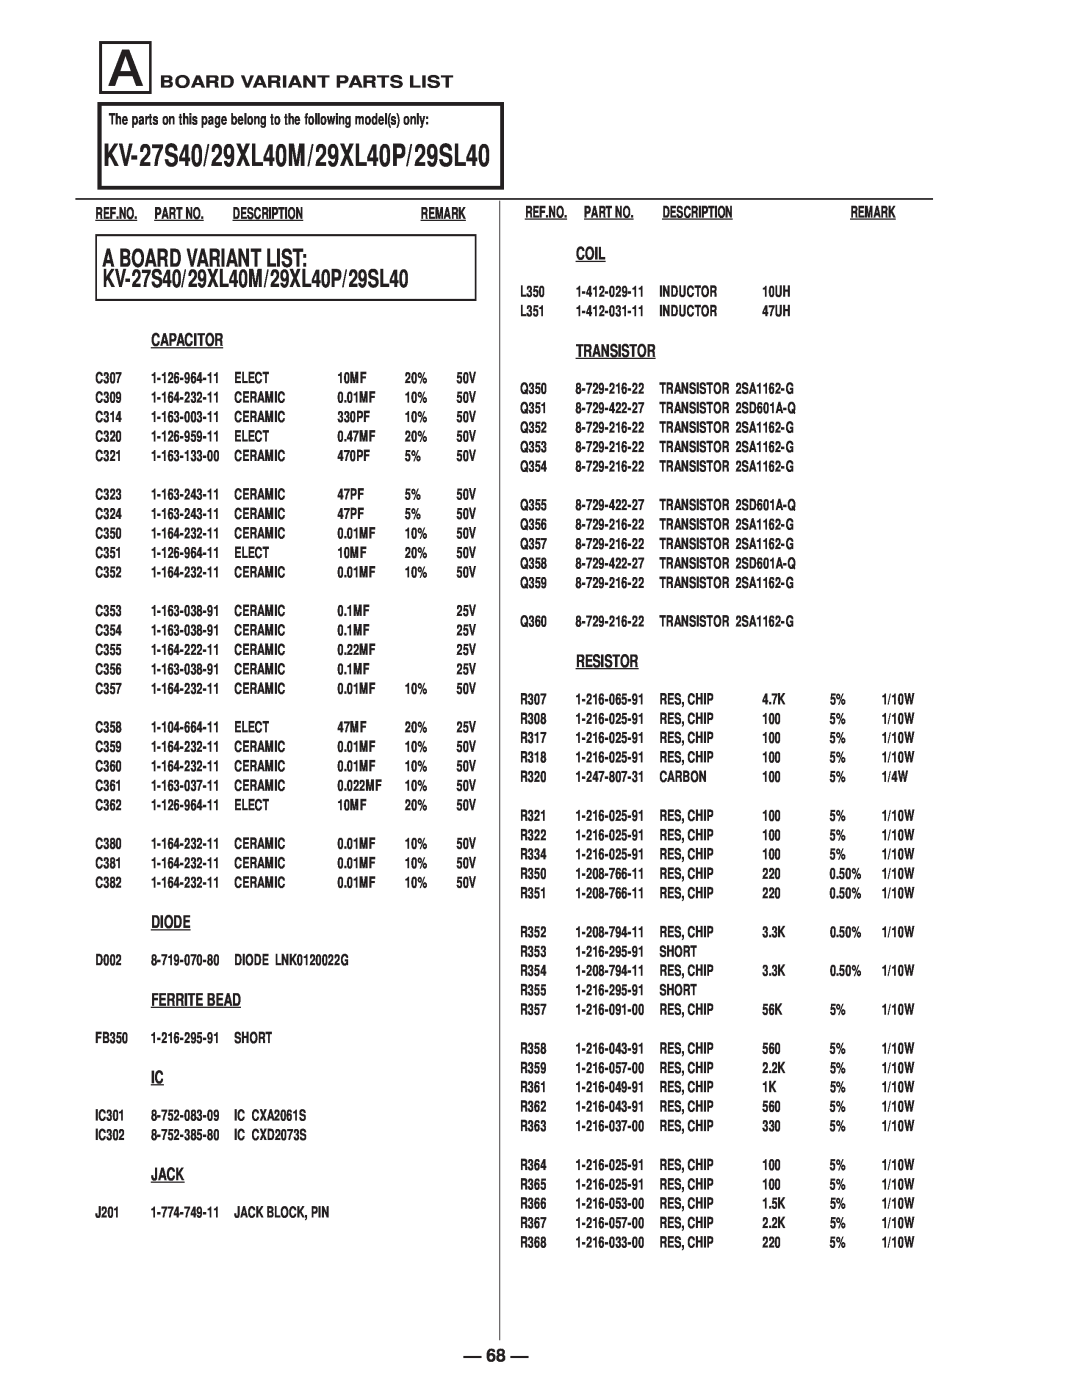 Sony KV-29SL65, KV-29SL40 KV-27S40/29XL40M/29XL40P/29SL40, A Board Variant Parts List, Ref.No. Part No, Description 